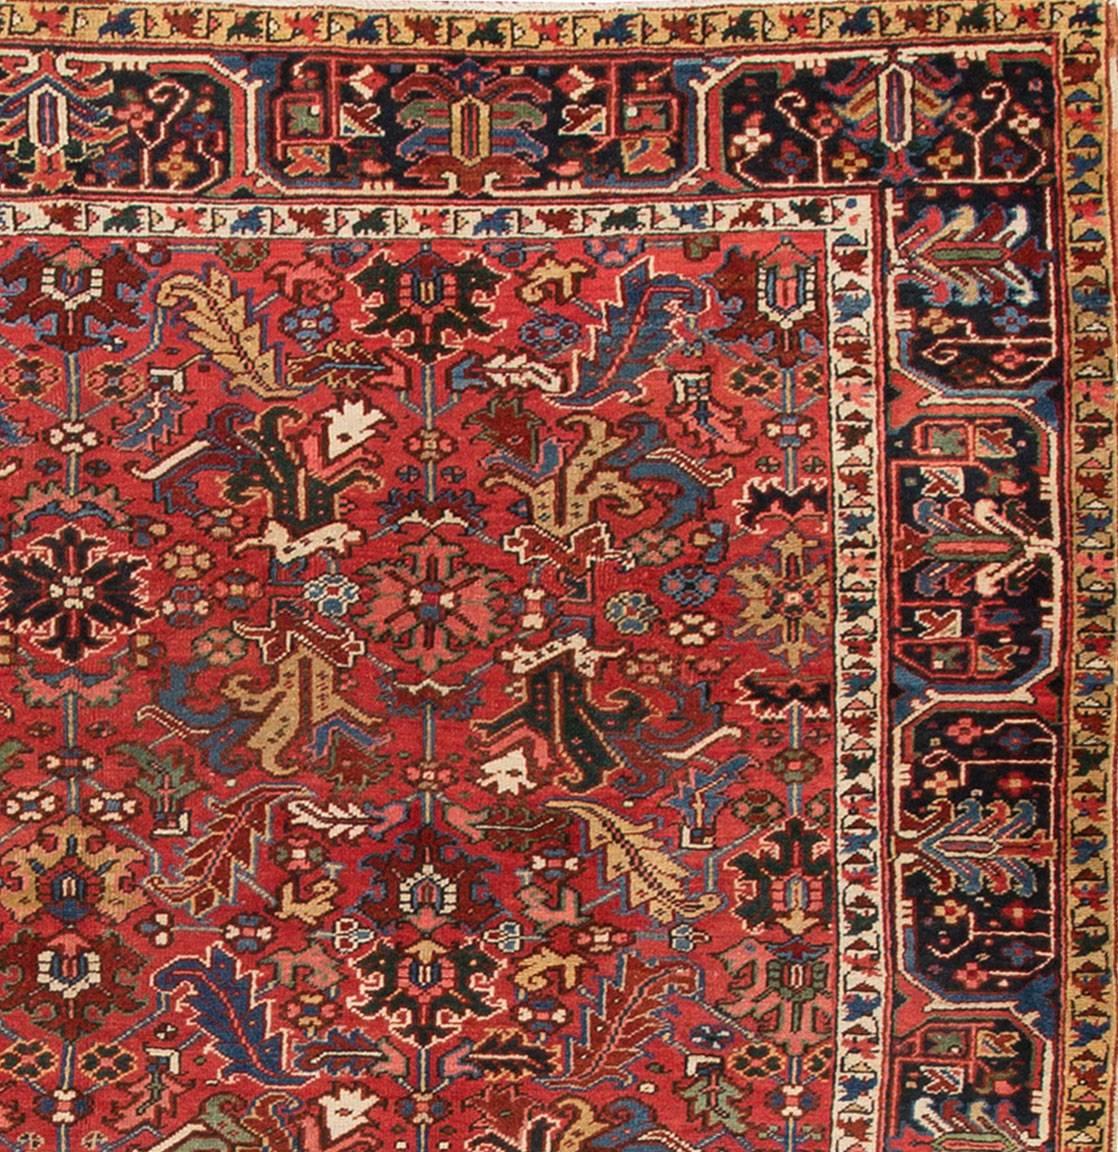 1920s Persian Heriz carpet, rust/red background, measure: 7.11 x 10.03.